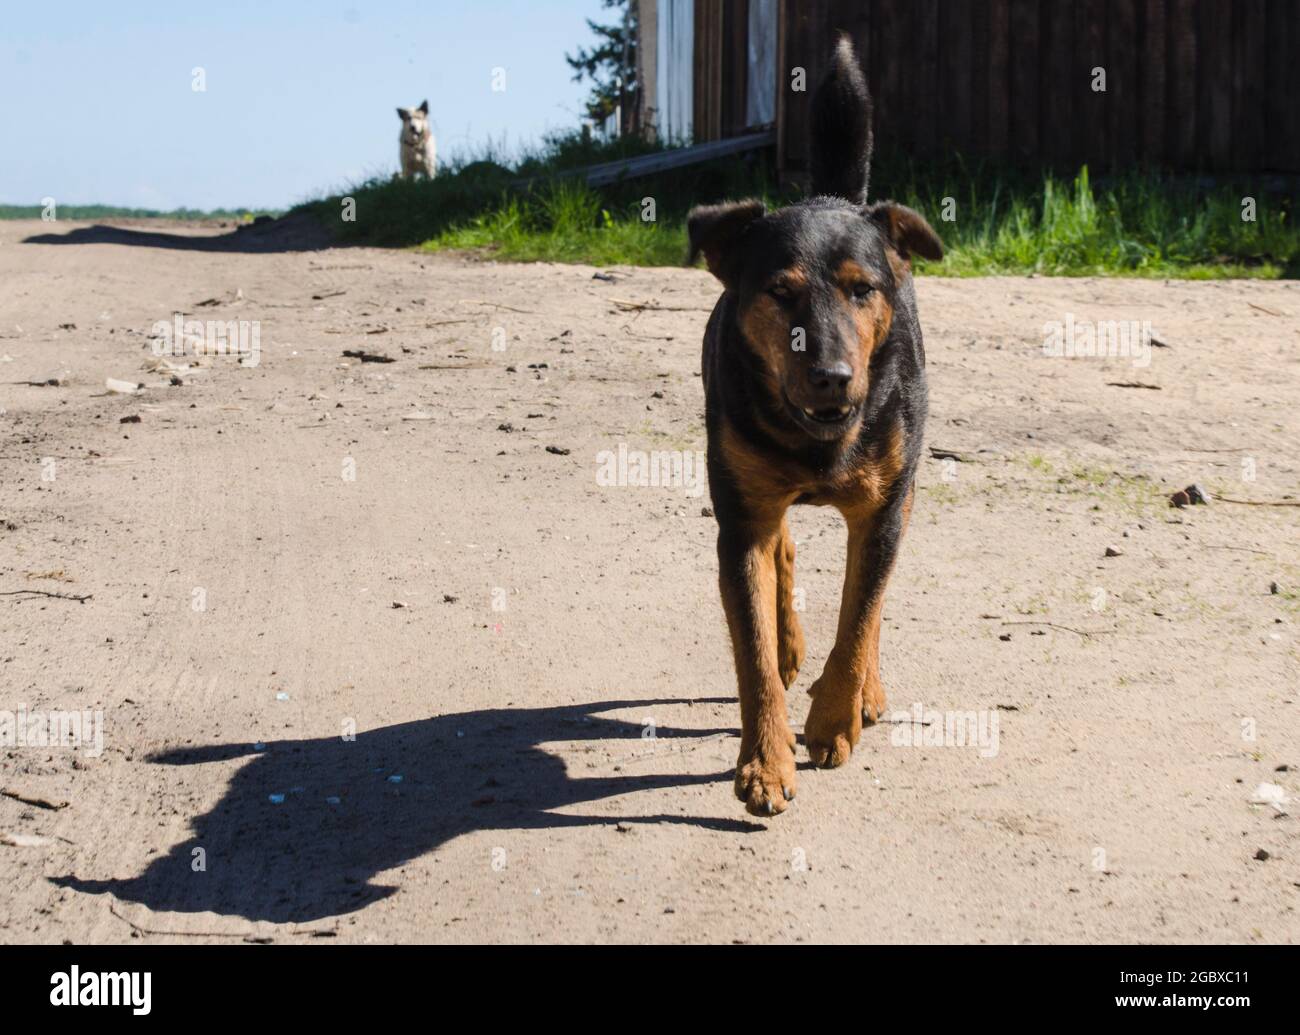 The dark dog runs down the road Stock Photo